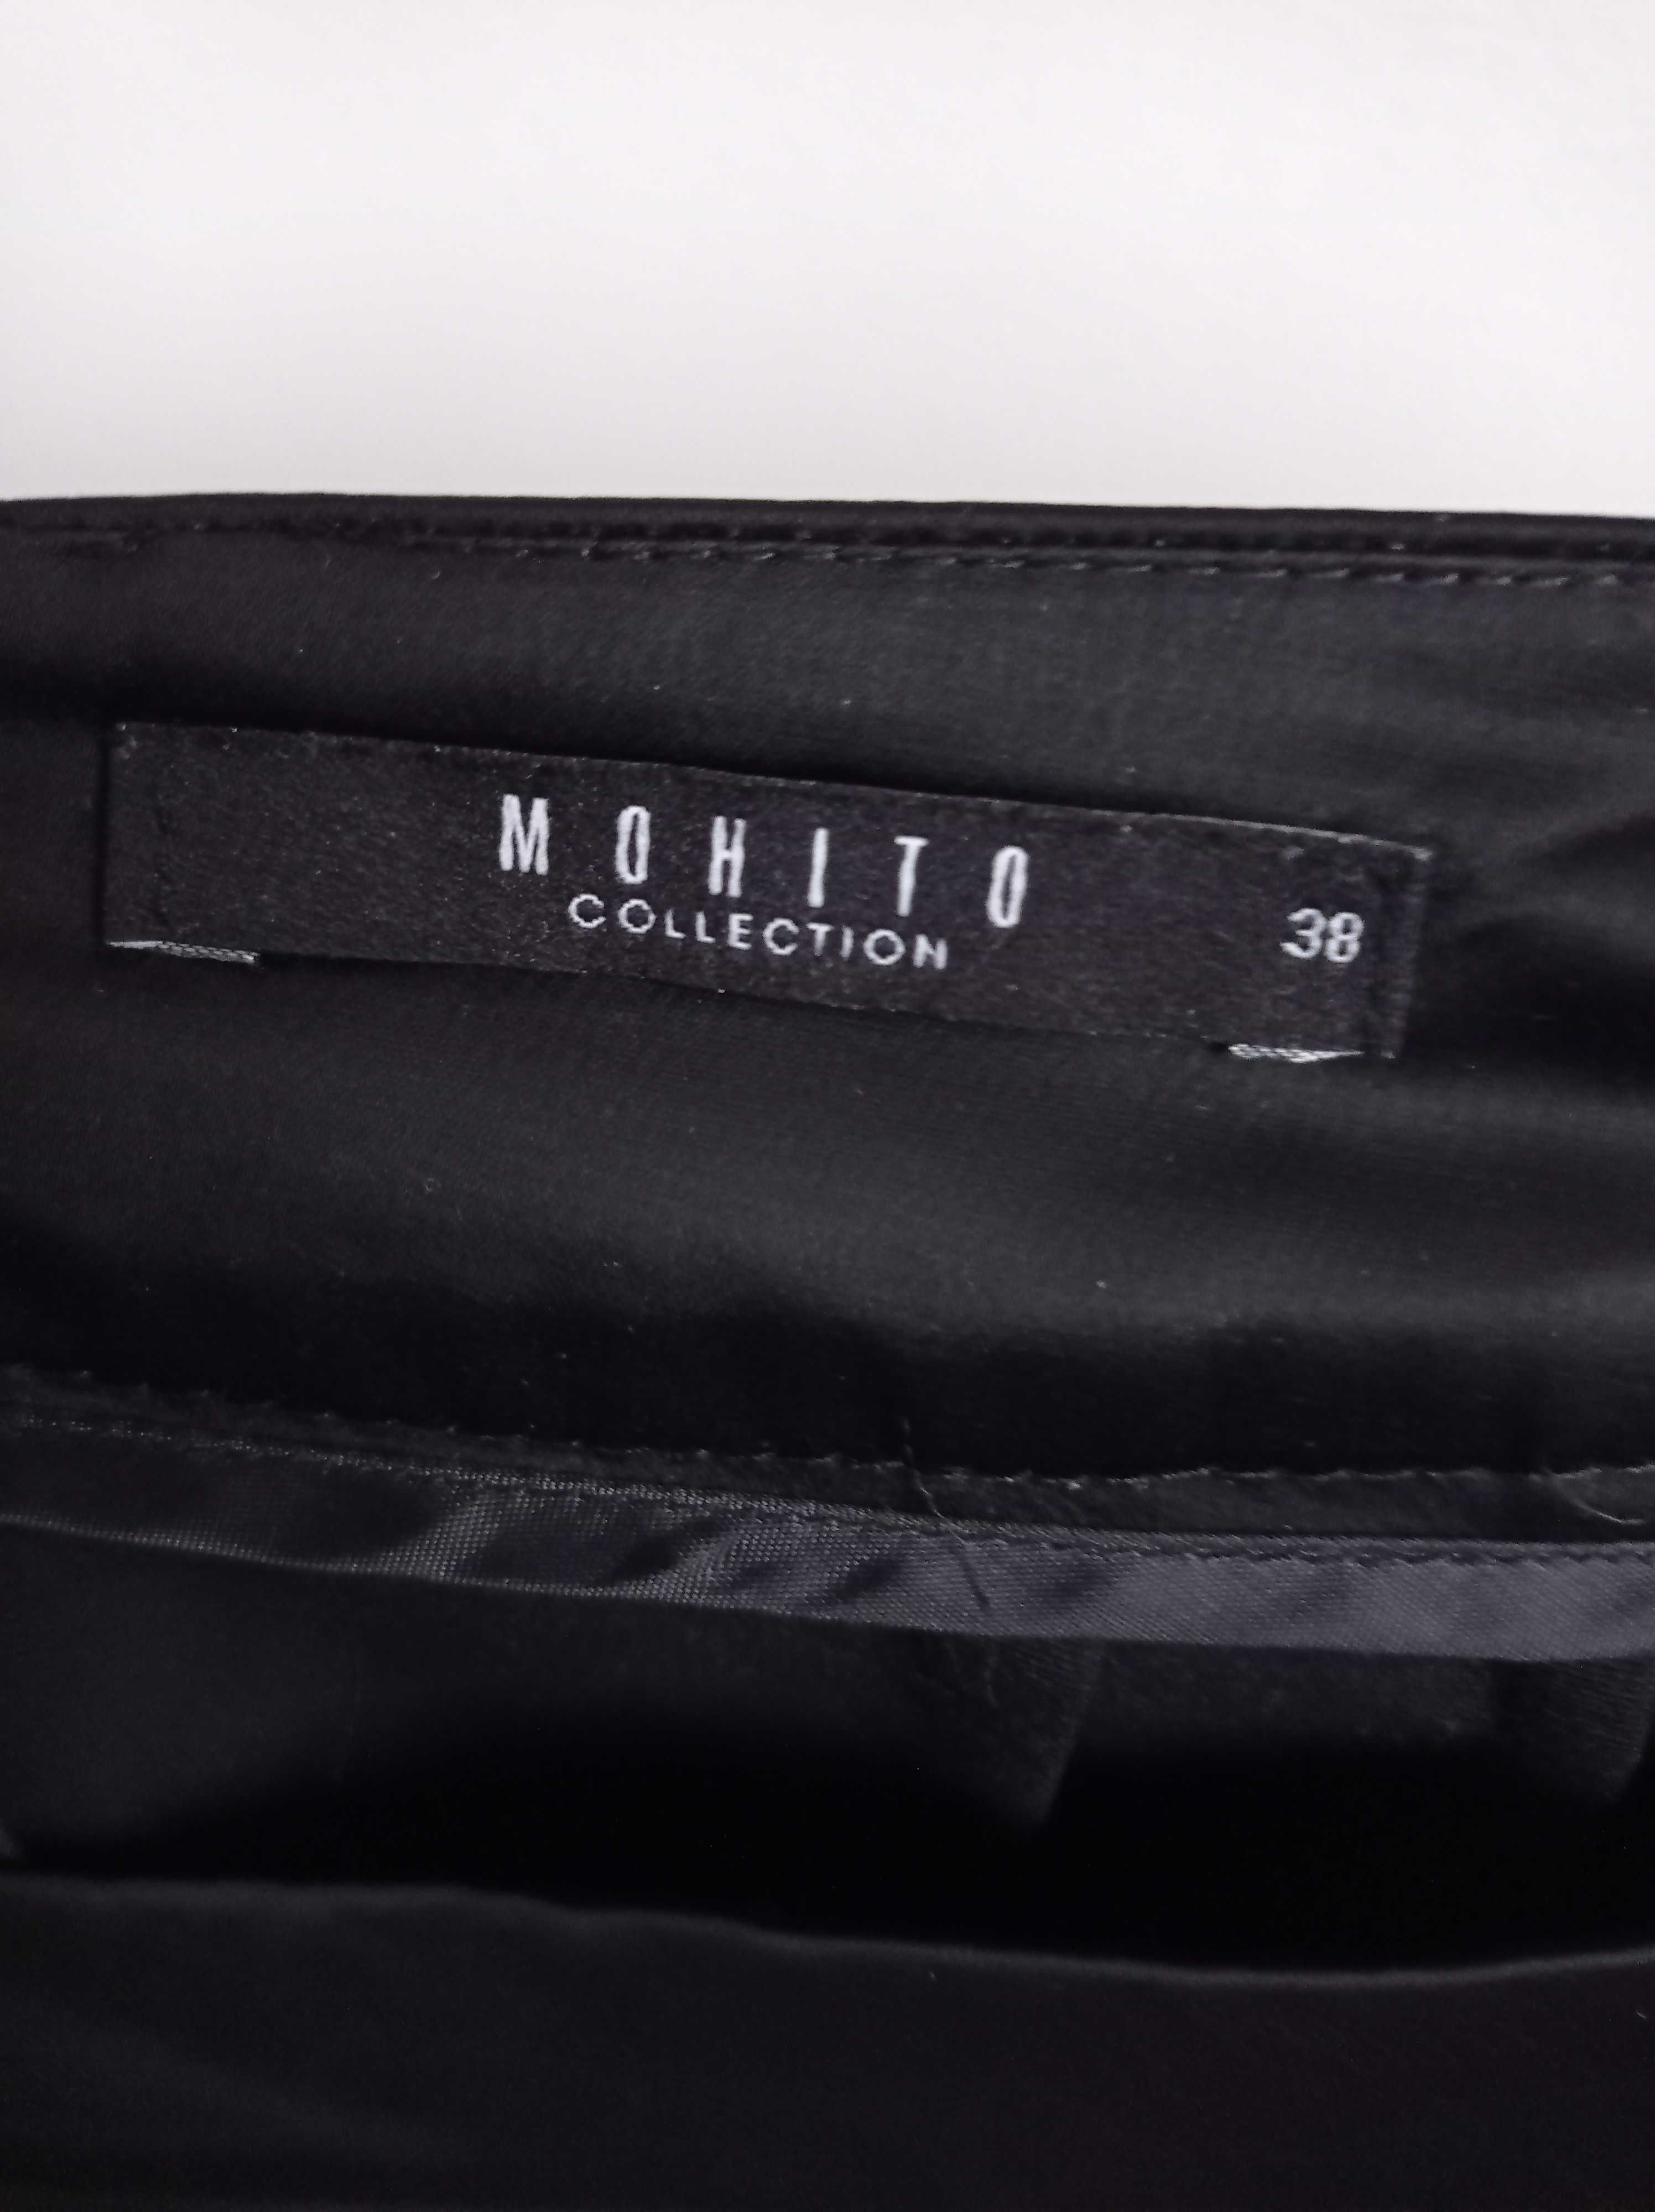 Spódnica czarna satynowa MOHITO M 38